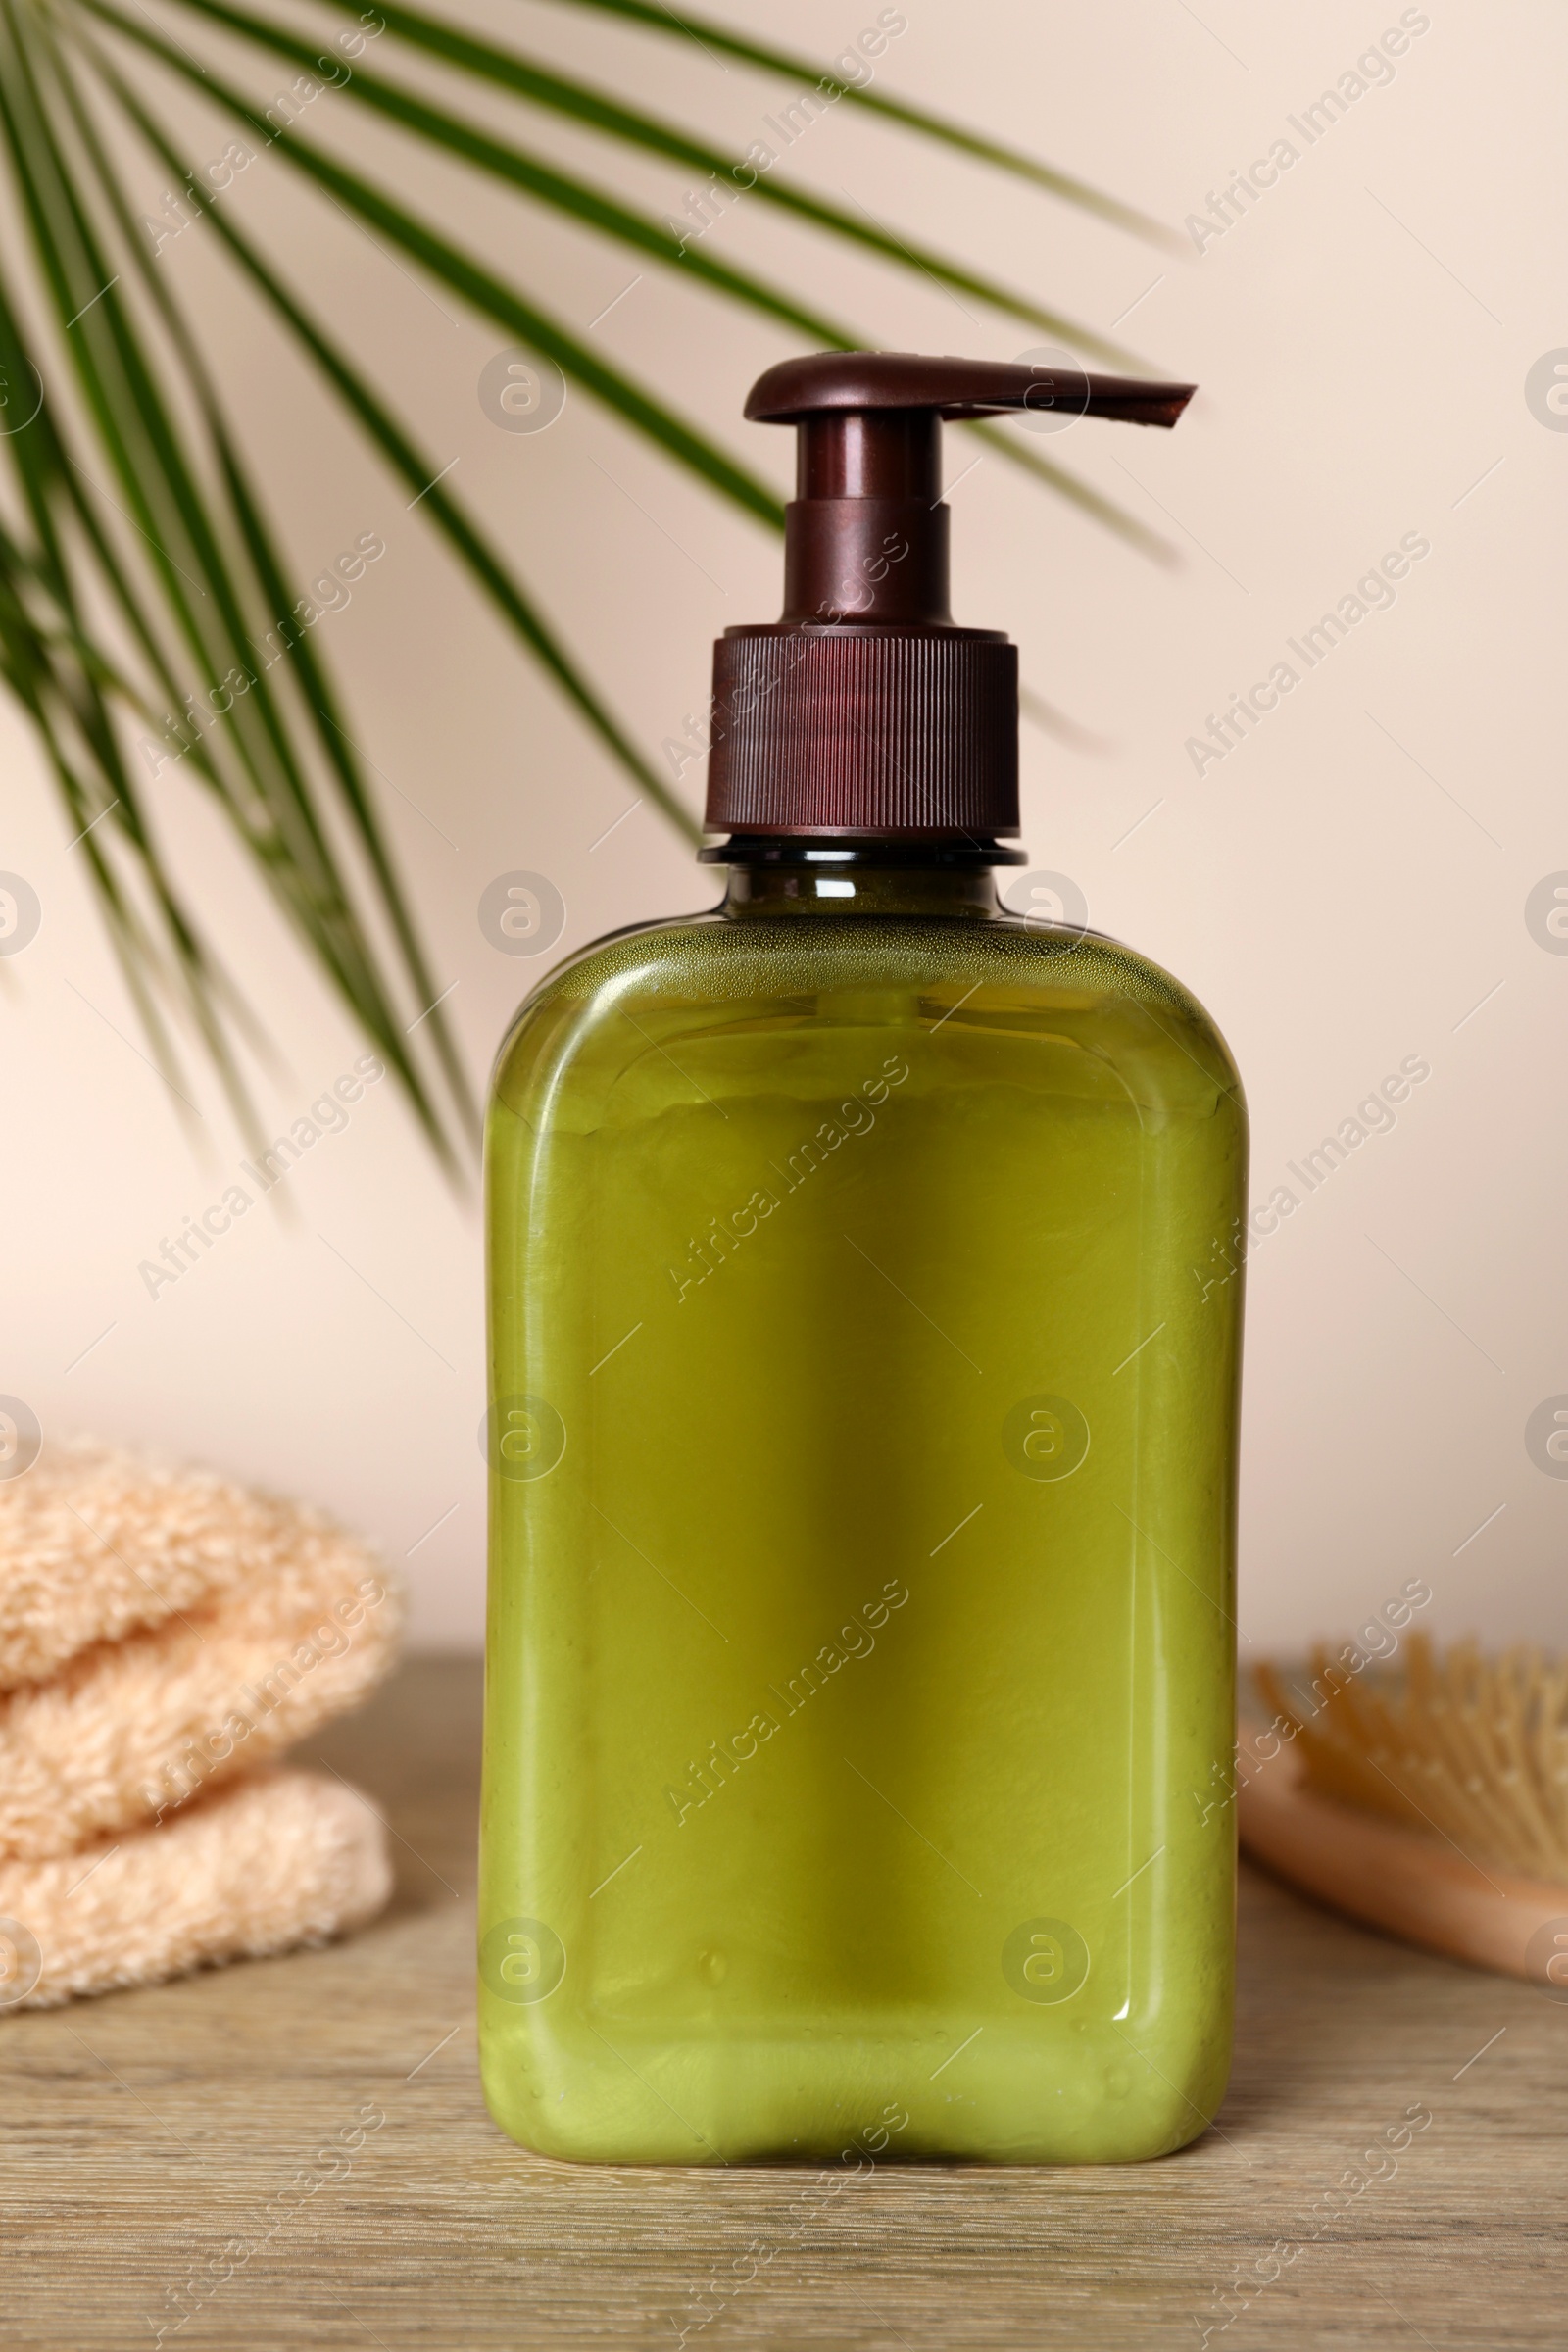 Photo of Bottle of shampoo on wooden table near beige wall